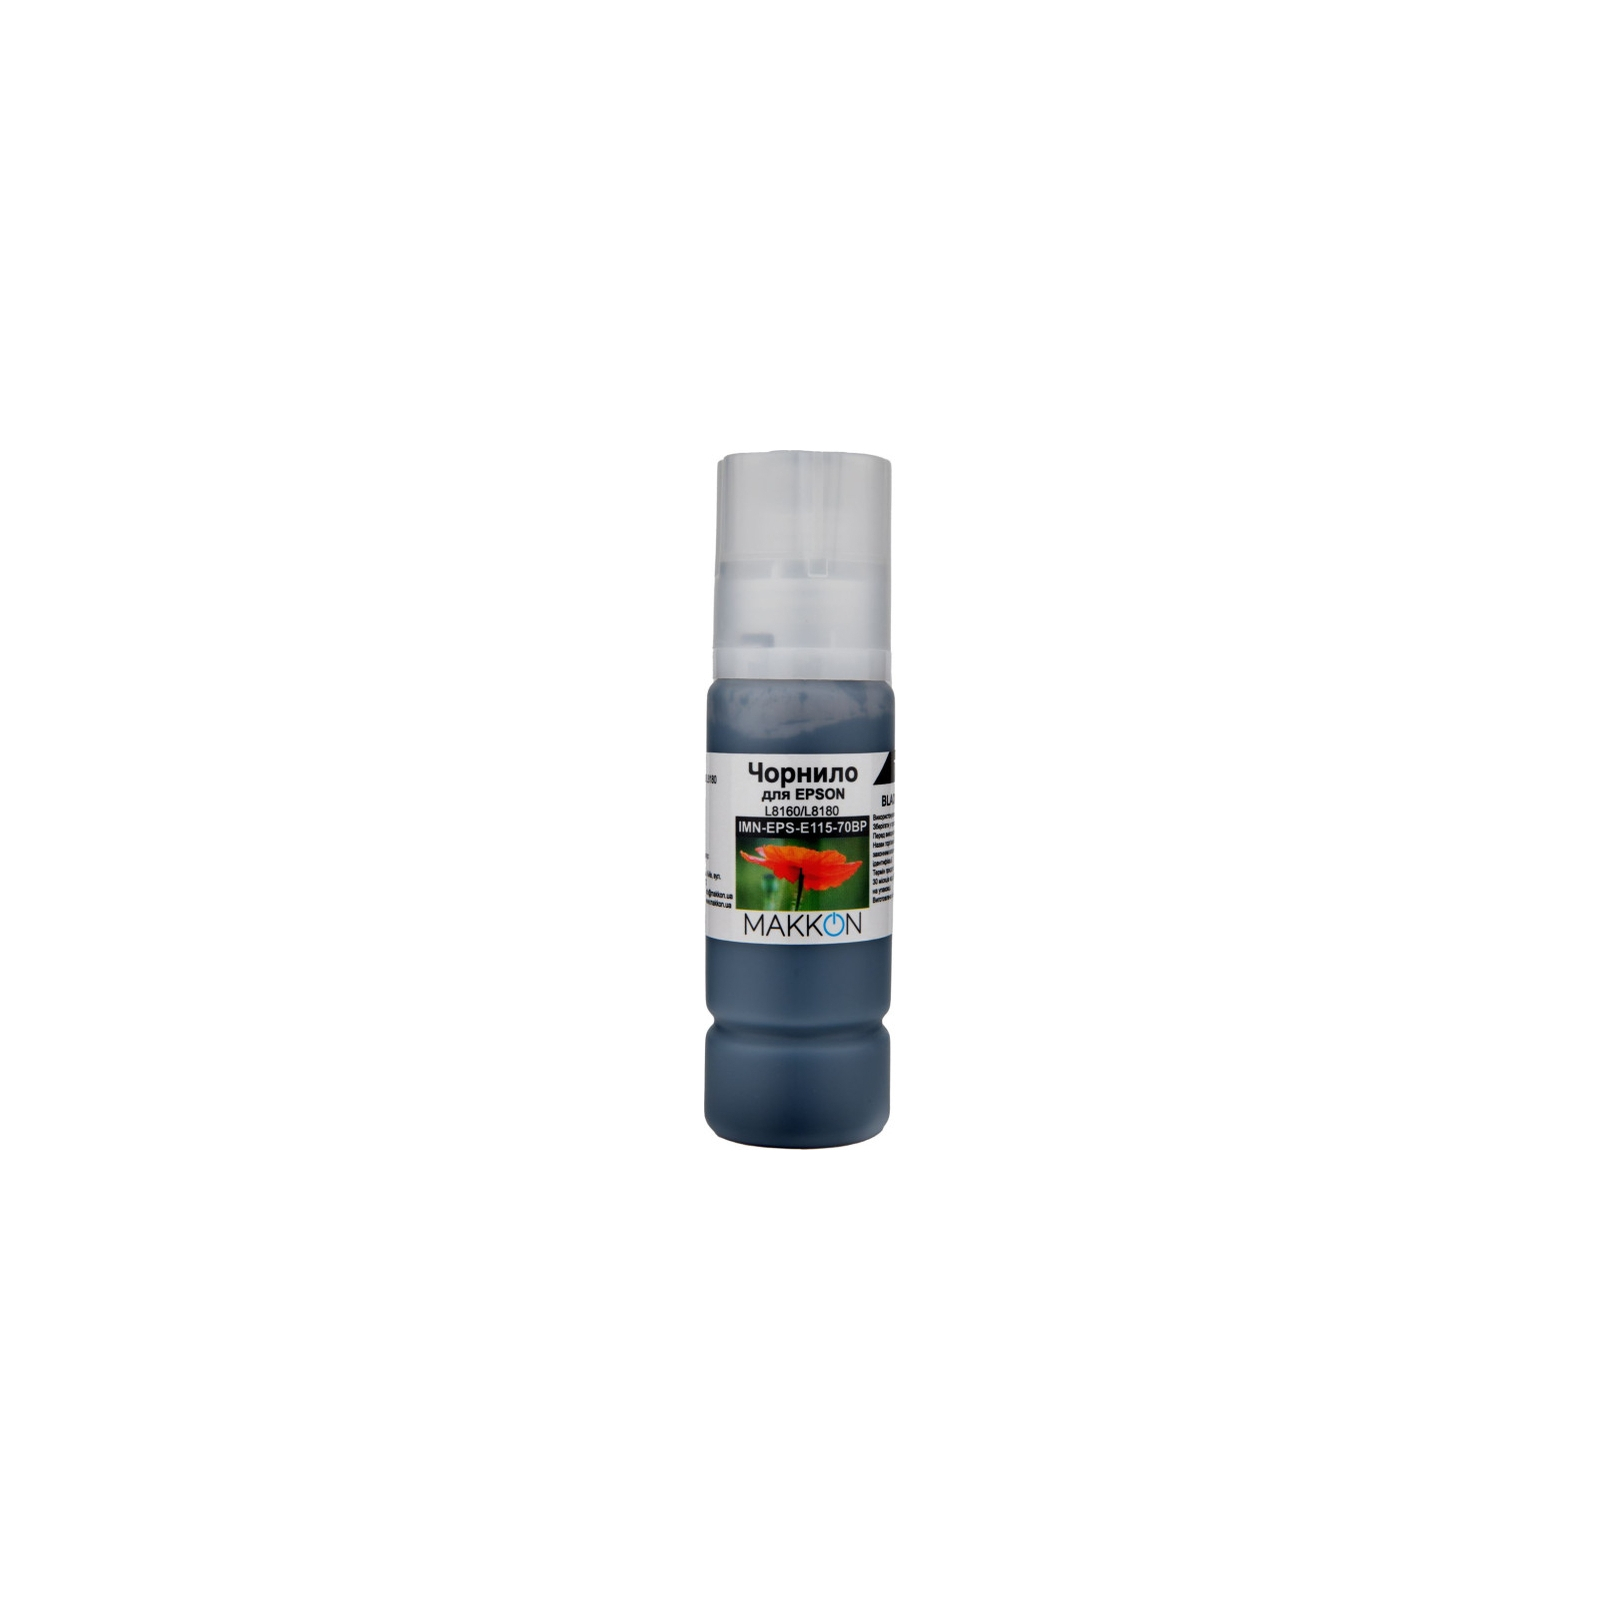 Чернила Makkon для Epson L8160/L8180 (C13T07C14A) (115) 70 мл black pigment (IMN-EPS-E115-70BP)